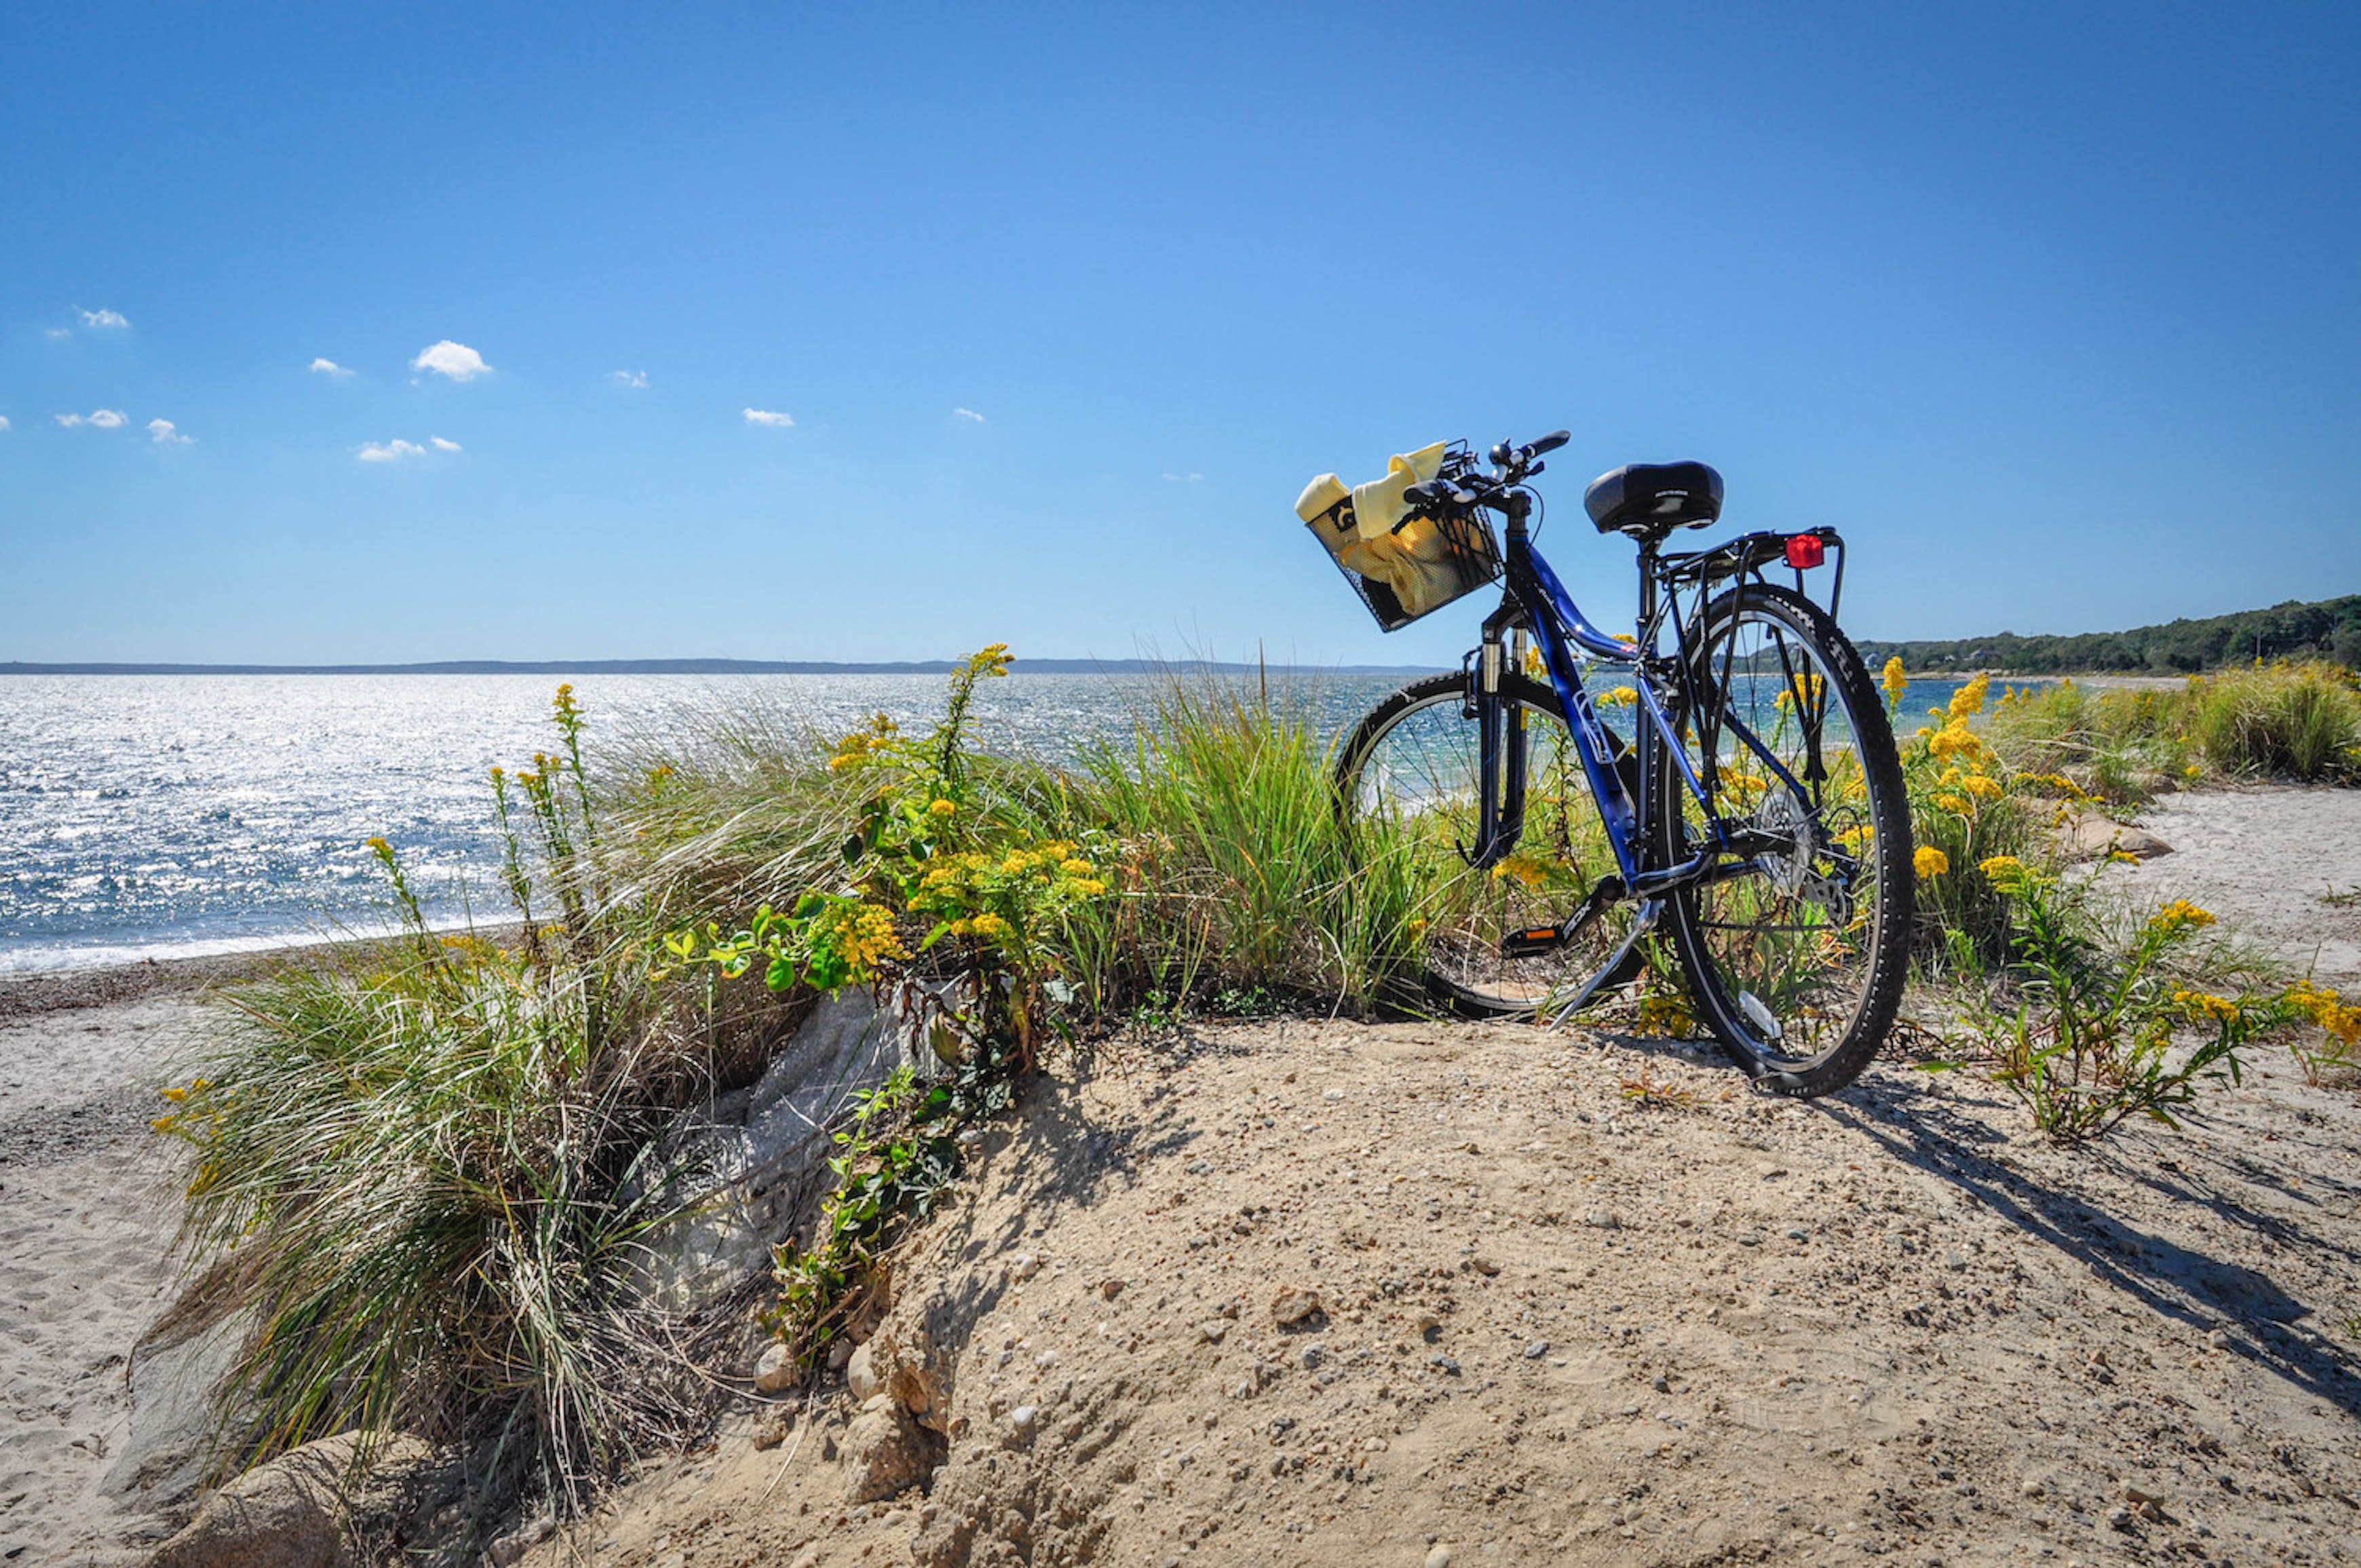 The best bike trails in Cape Cod - USA Massachusetts Cape CoD Lorie Brownell Shutterstock 743159635 RFC